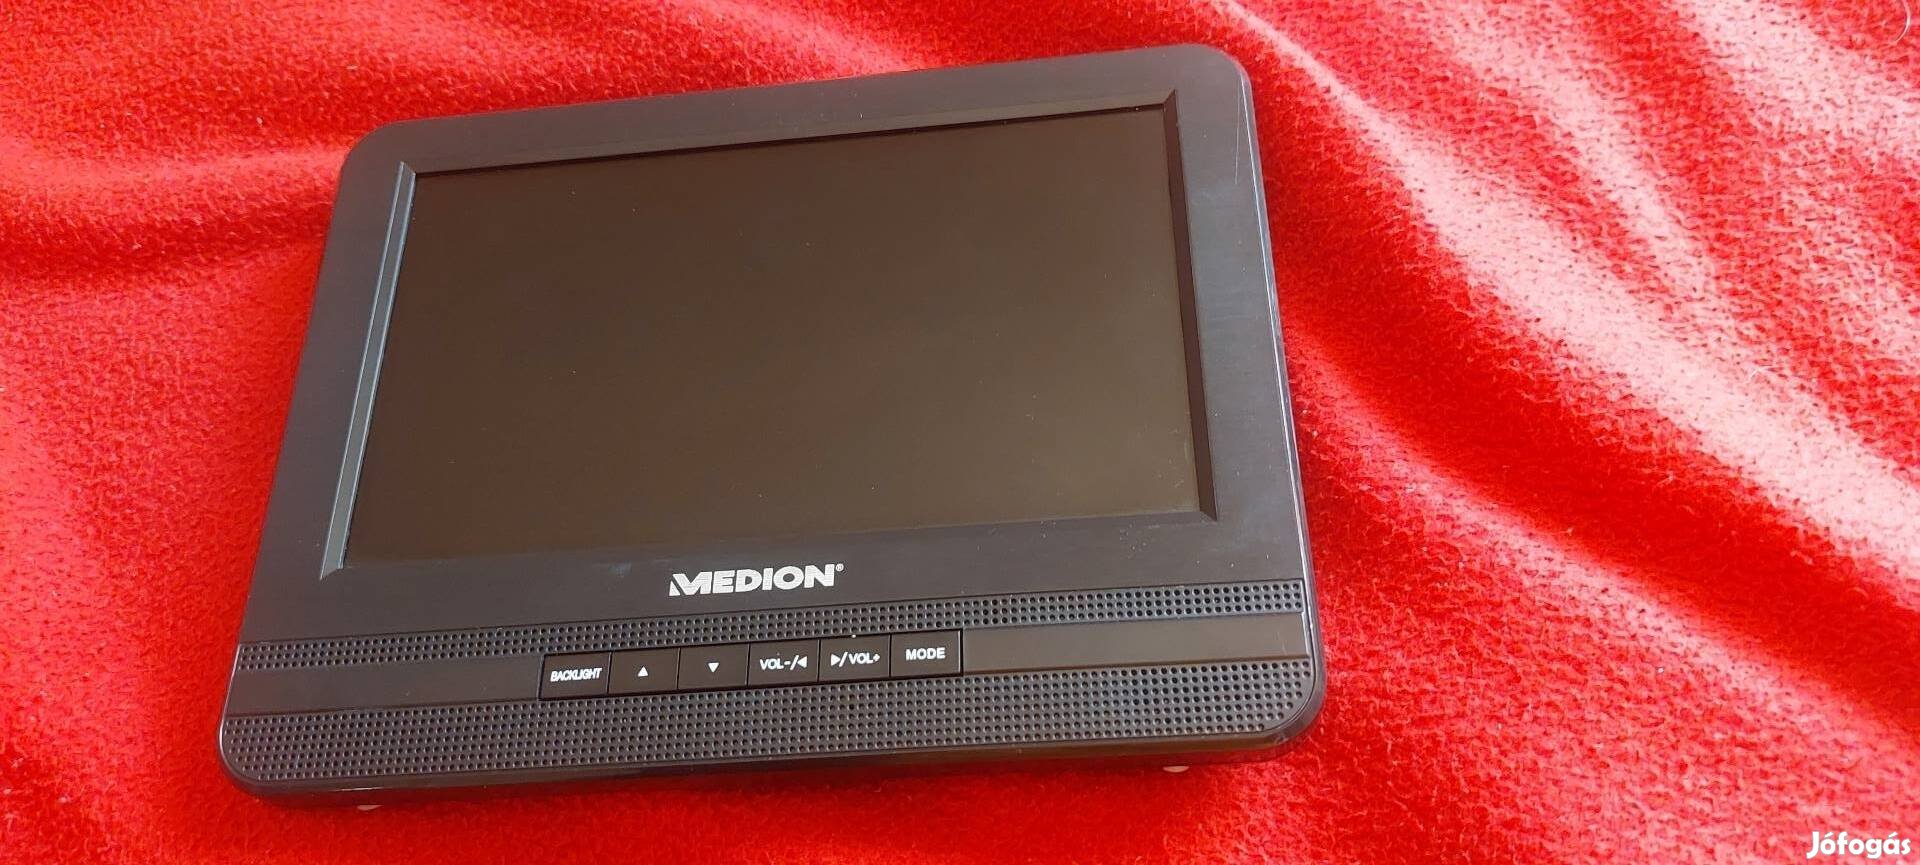 Medion MD 84873 Dvd -Player készülék